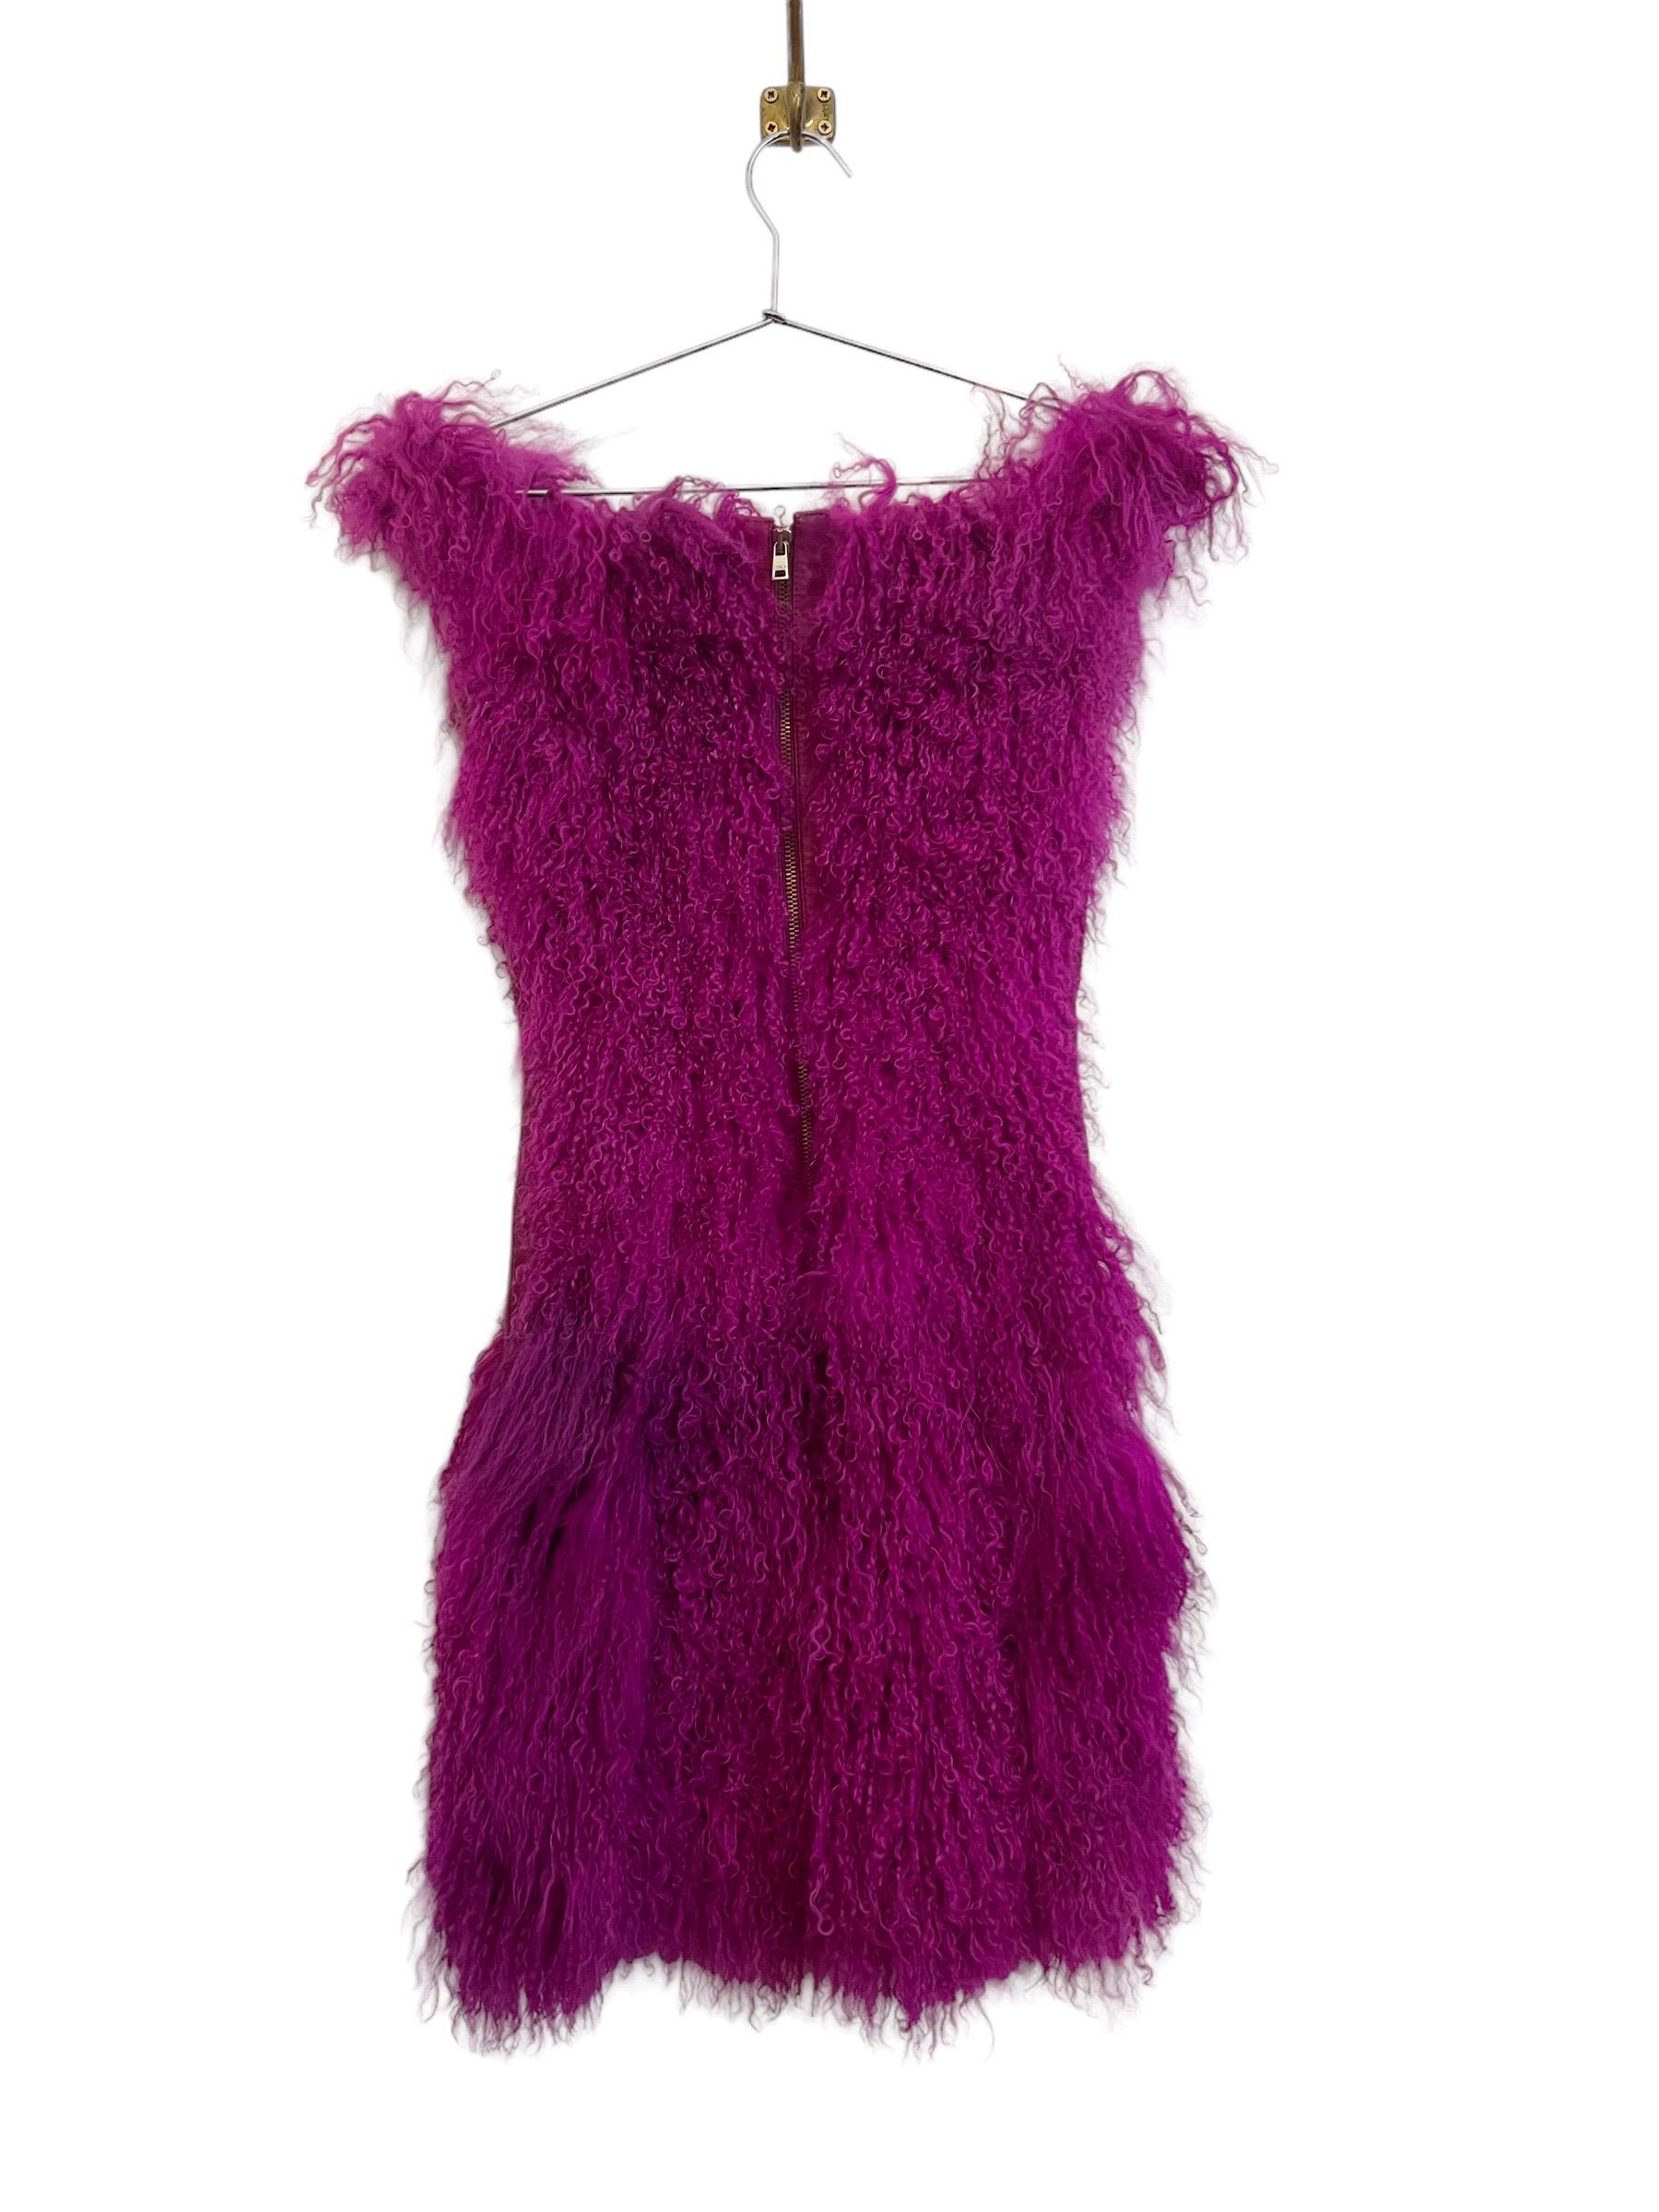 Outrageous VERSUS Versace 2012 Runway Magenta Purple Mongolian Lamb Fur Dress For Sale 8